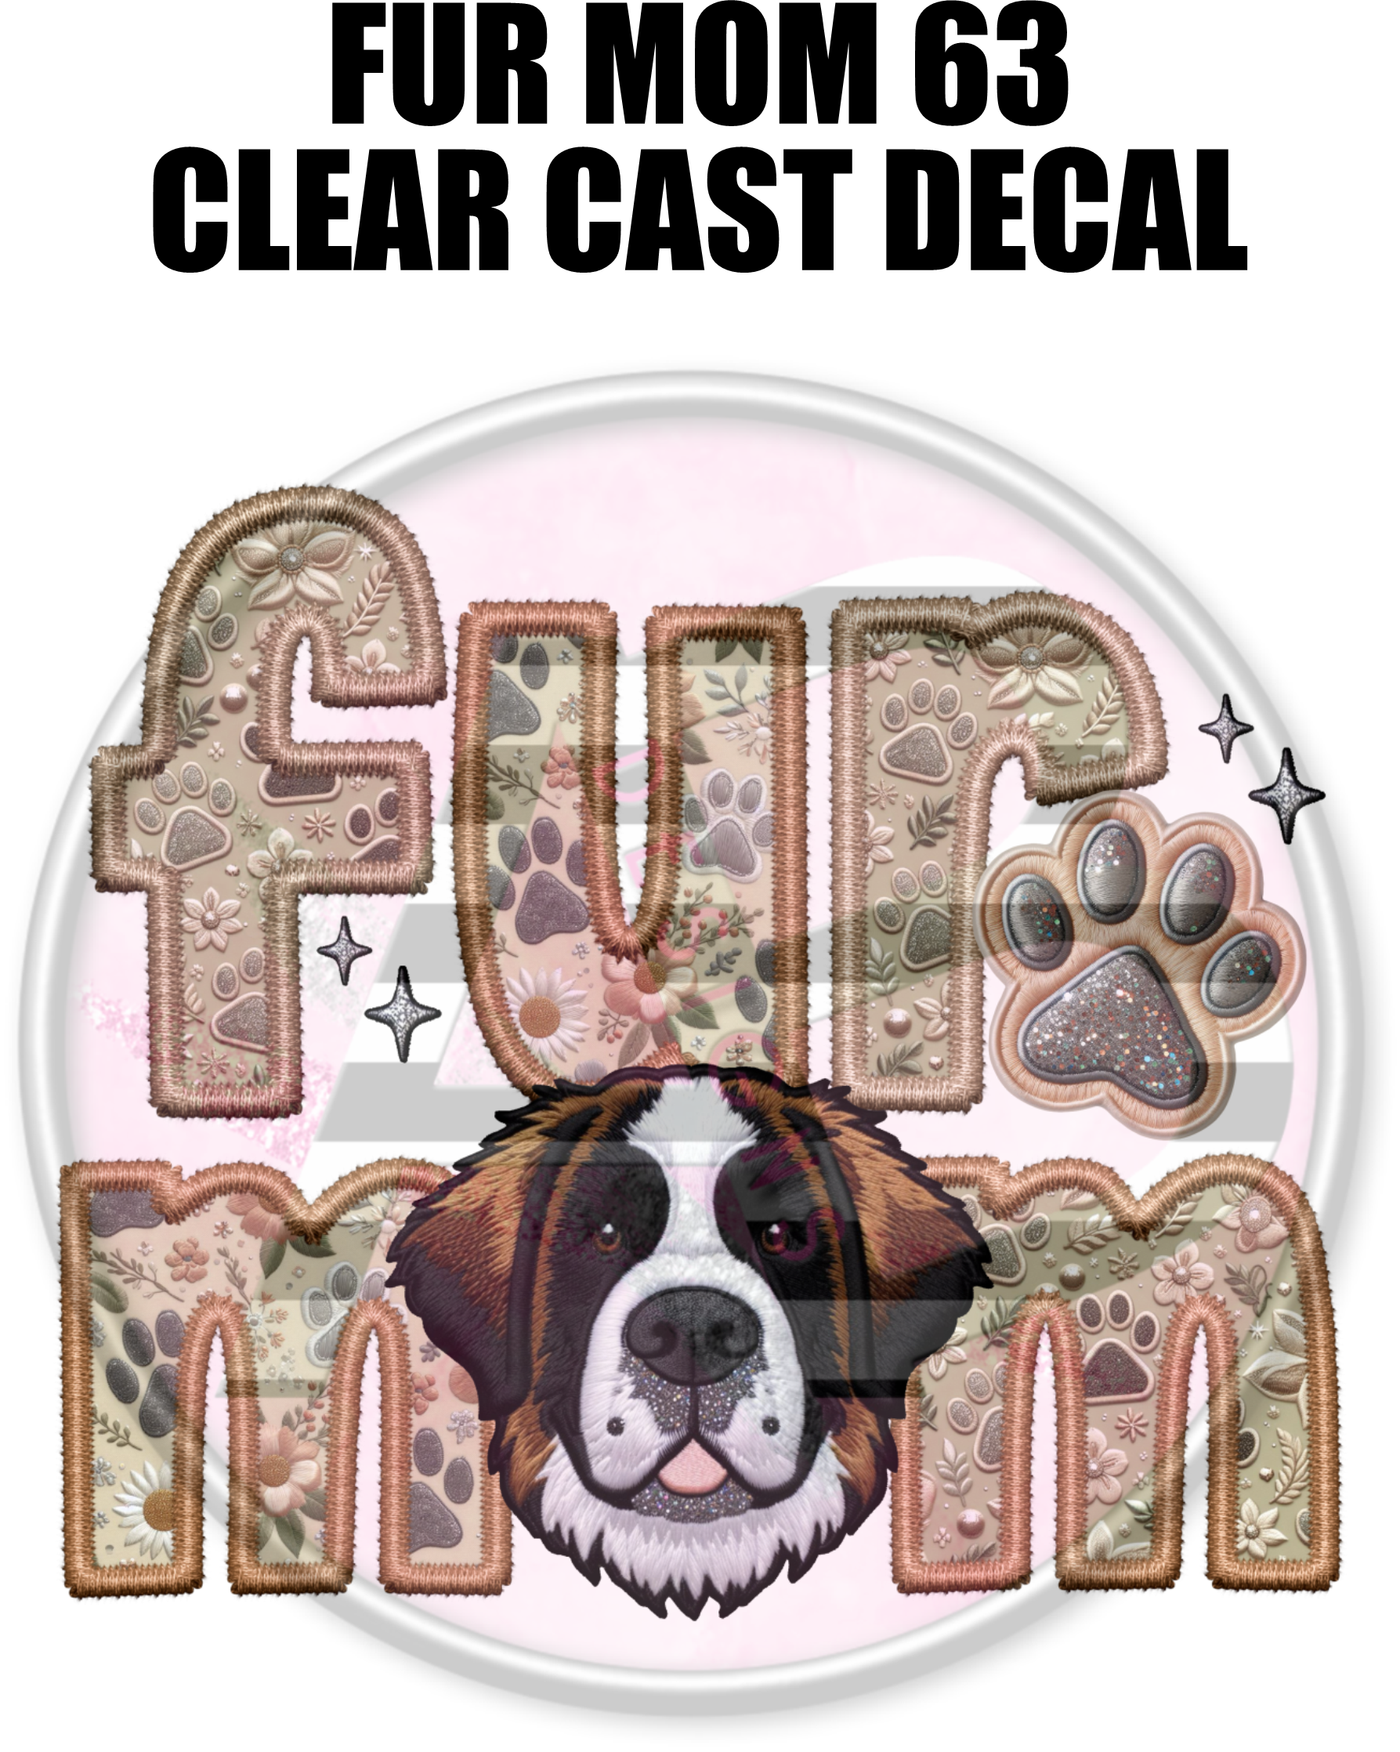 Fur Mom 63 - Clear Cast Decal